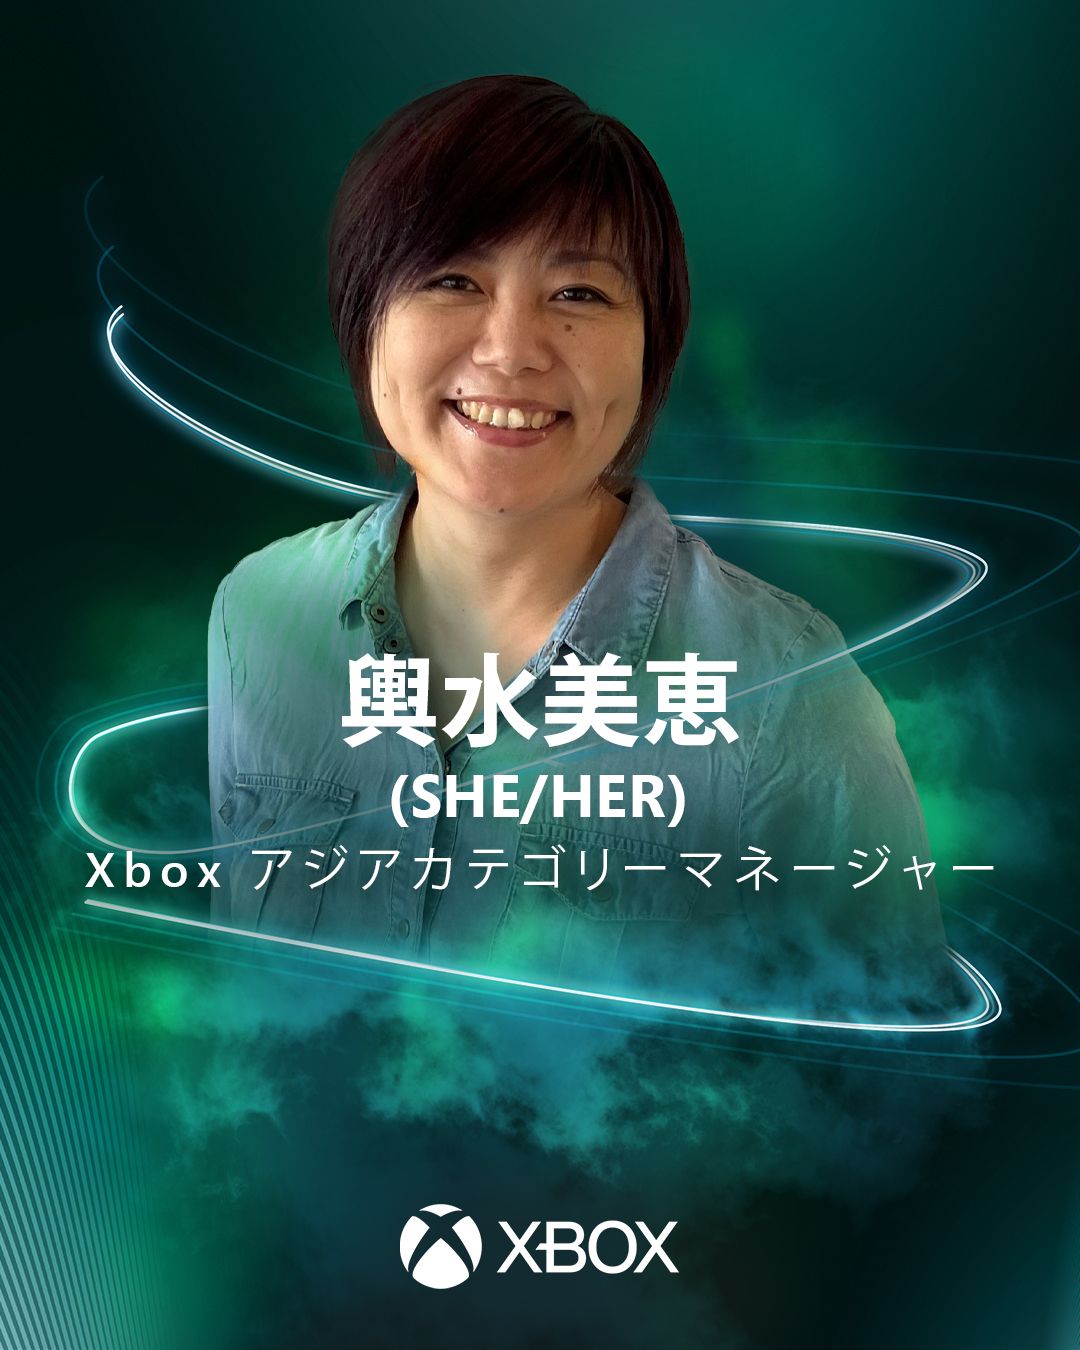 Mie Koshimizu (She/Her) Xbox Category Manager Region: Japan